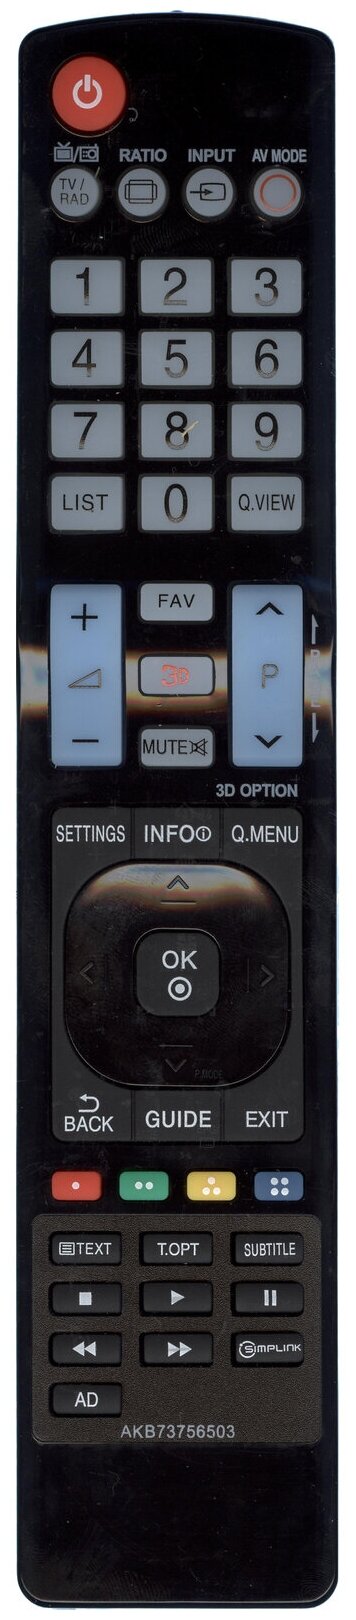 Пульт дистанционного управления LG AKB73756503 ic LCD 3d TV (HLG370) - фото №2